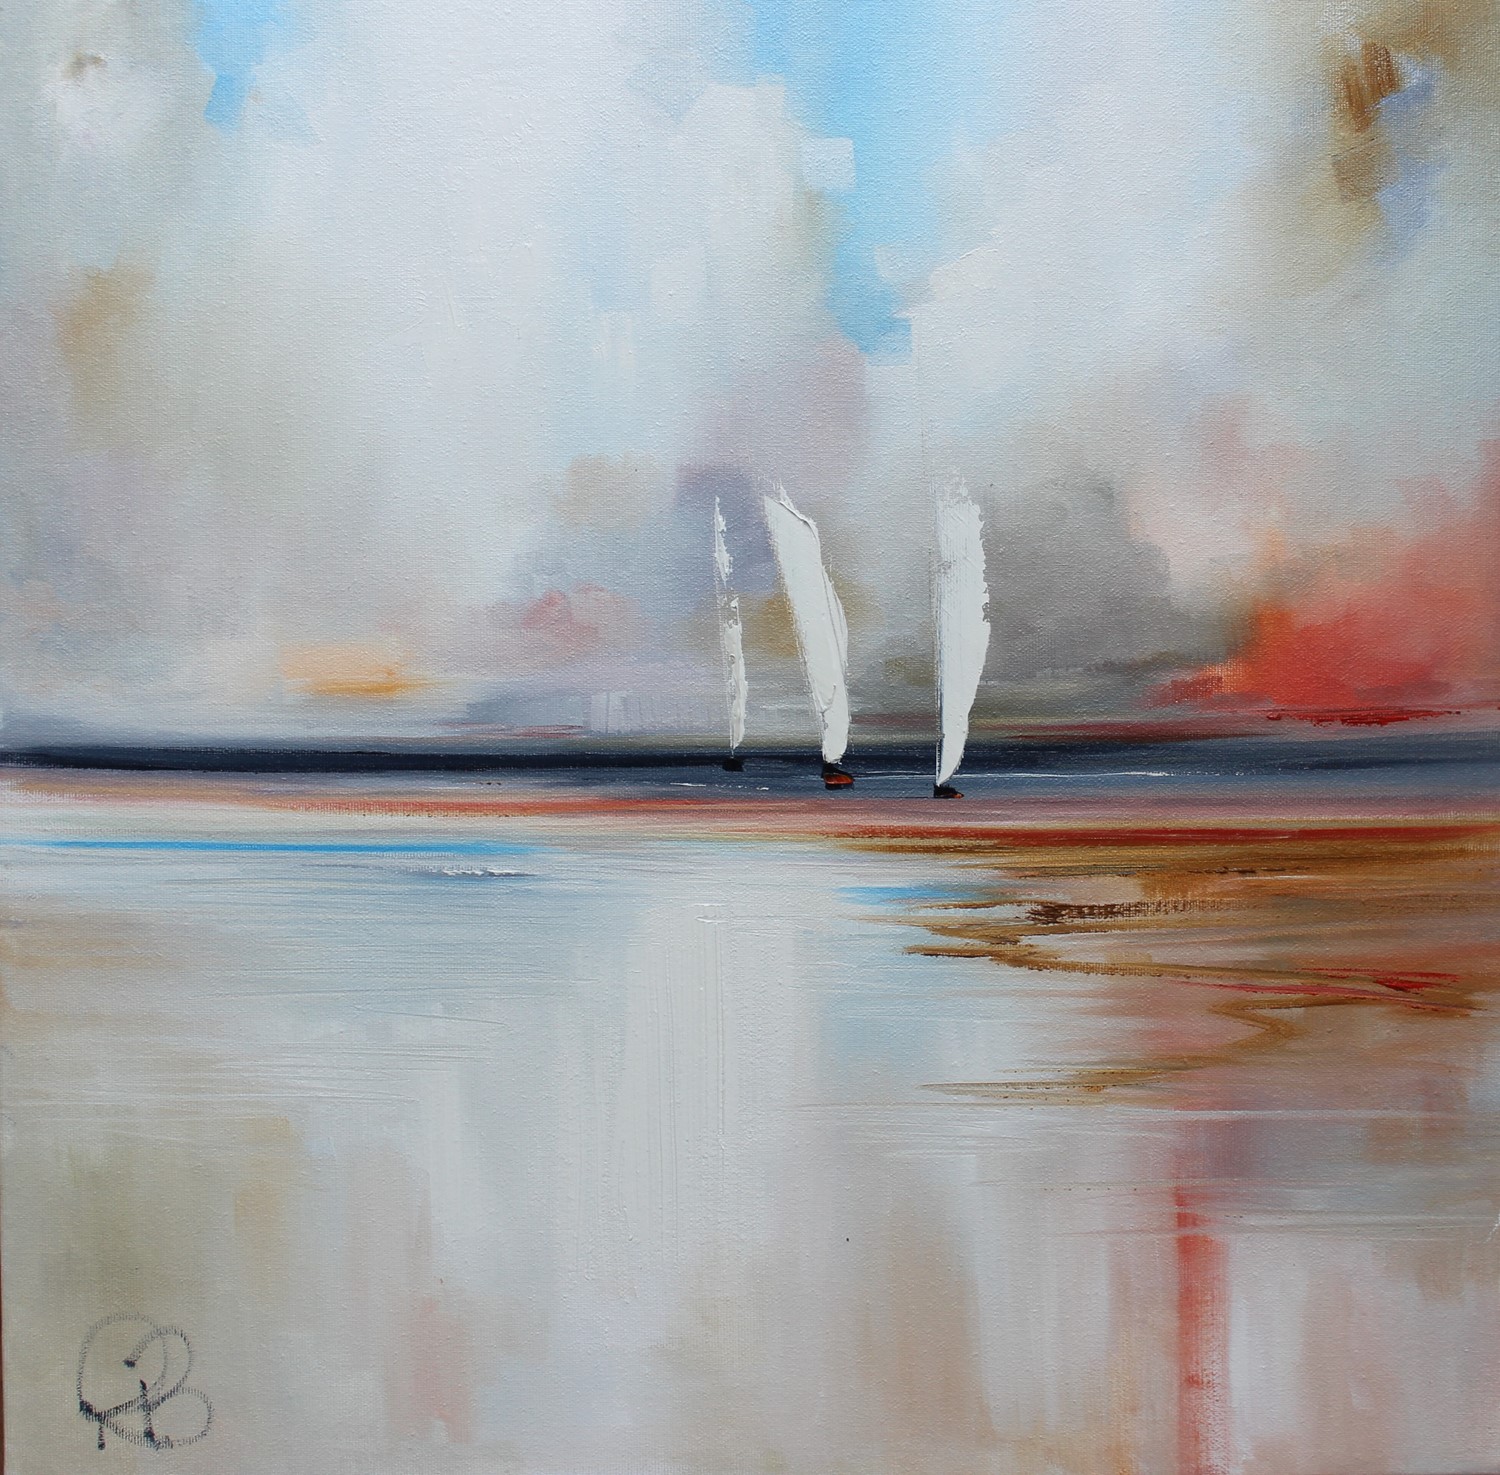 'Three sails as night falls' by artist Rosanne Barr